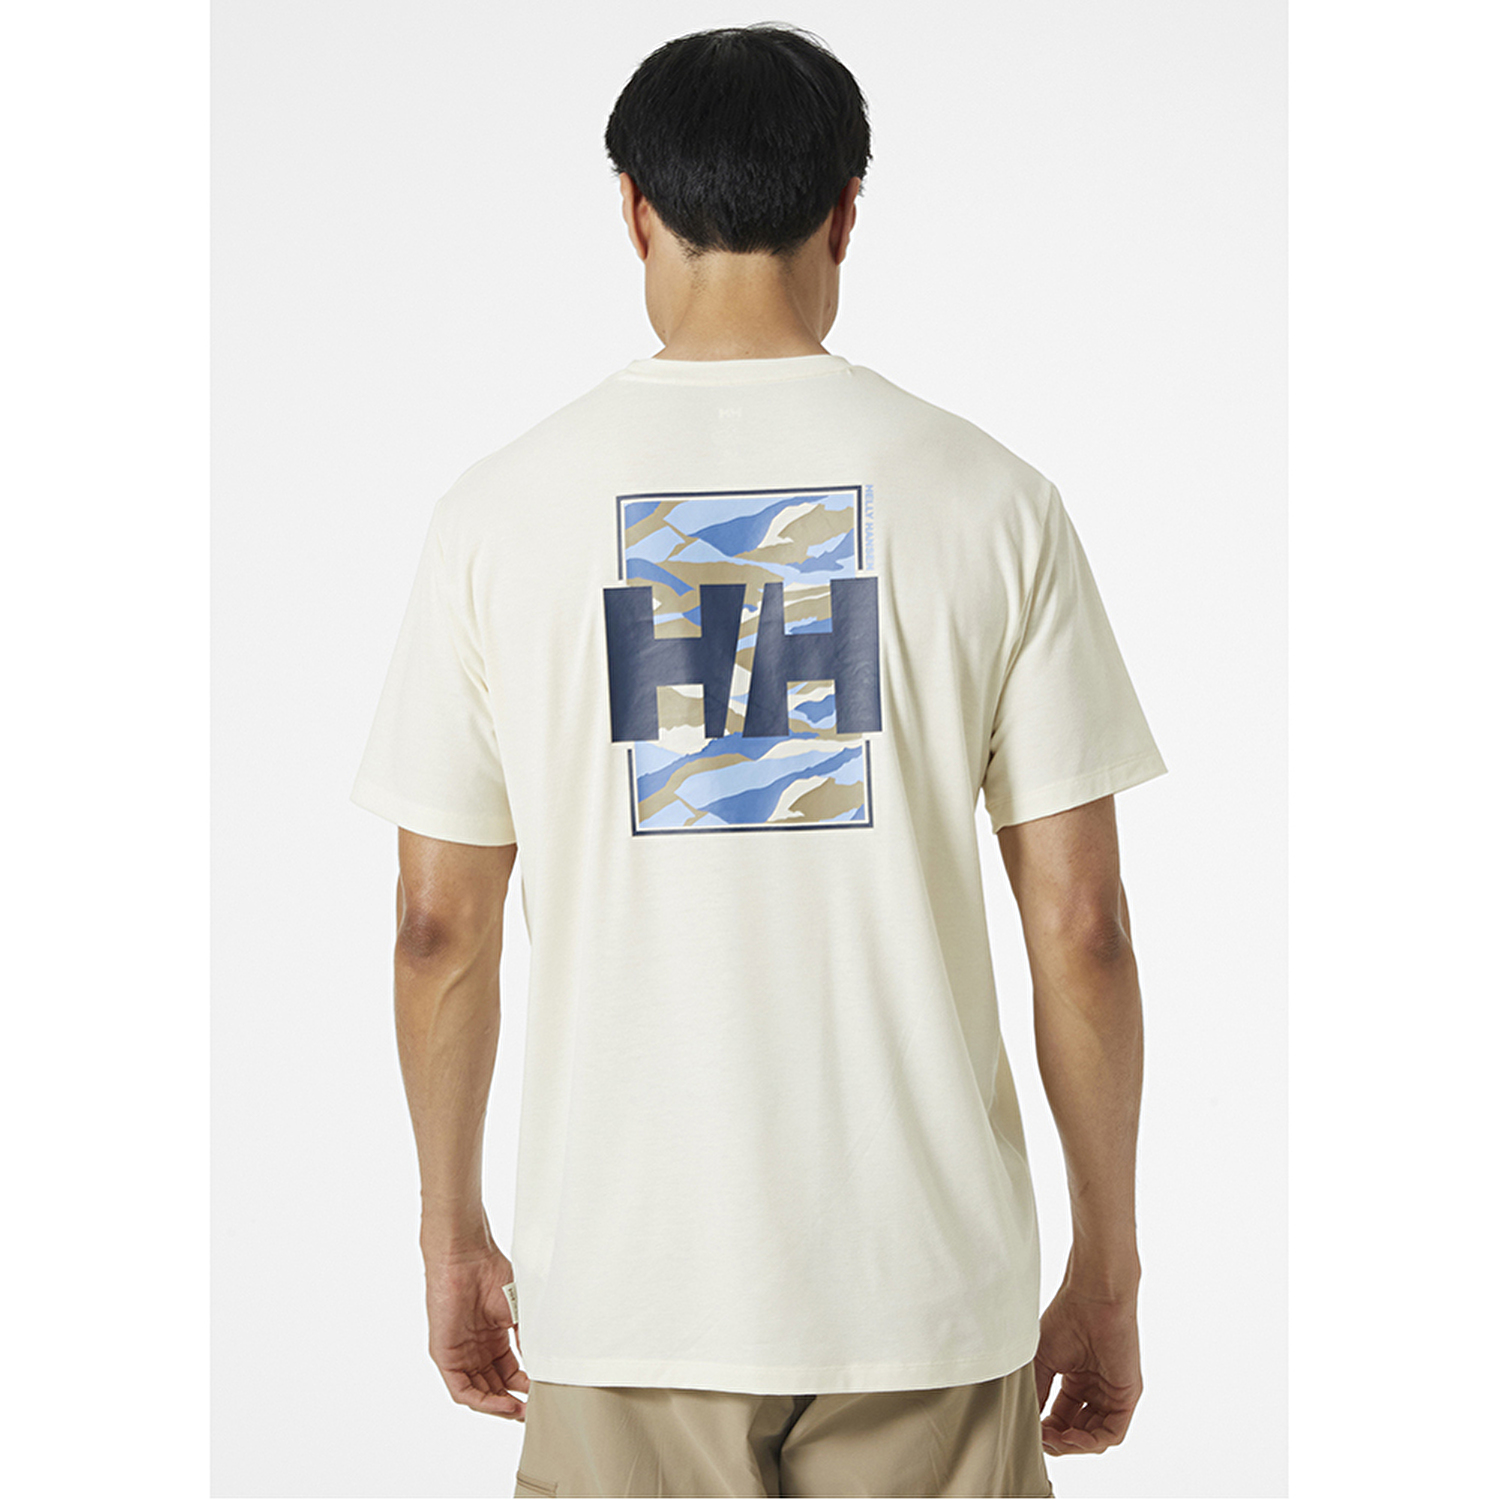 Helly Hansen Skog Recycled Graphic Erkek Kısa Kollu T-Shirt